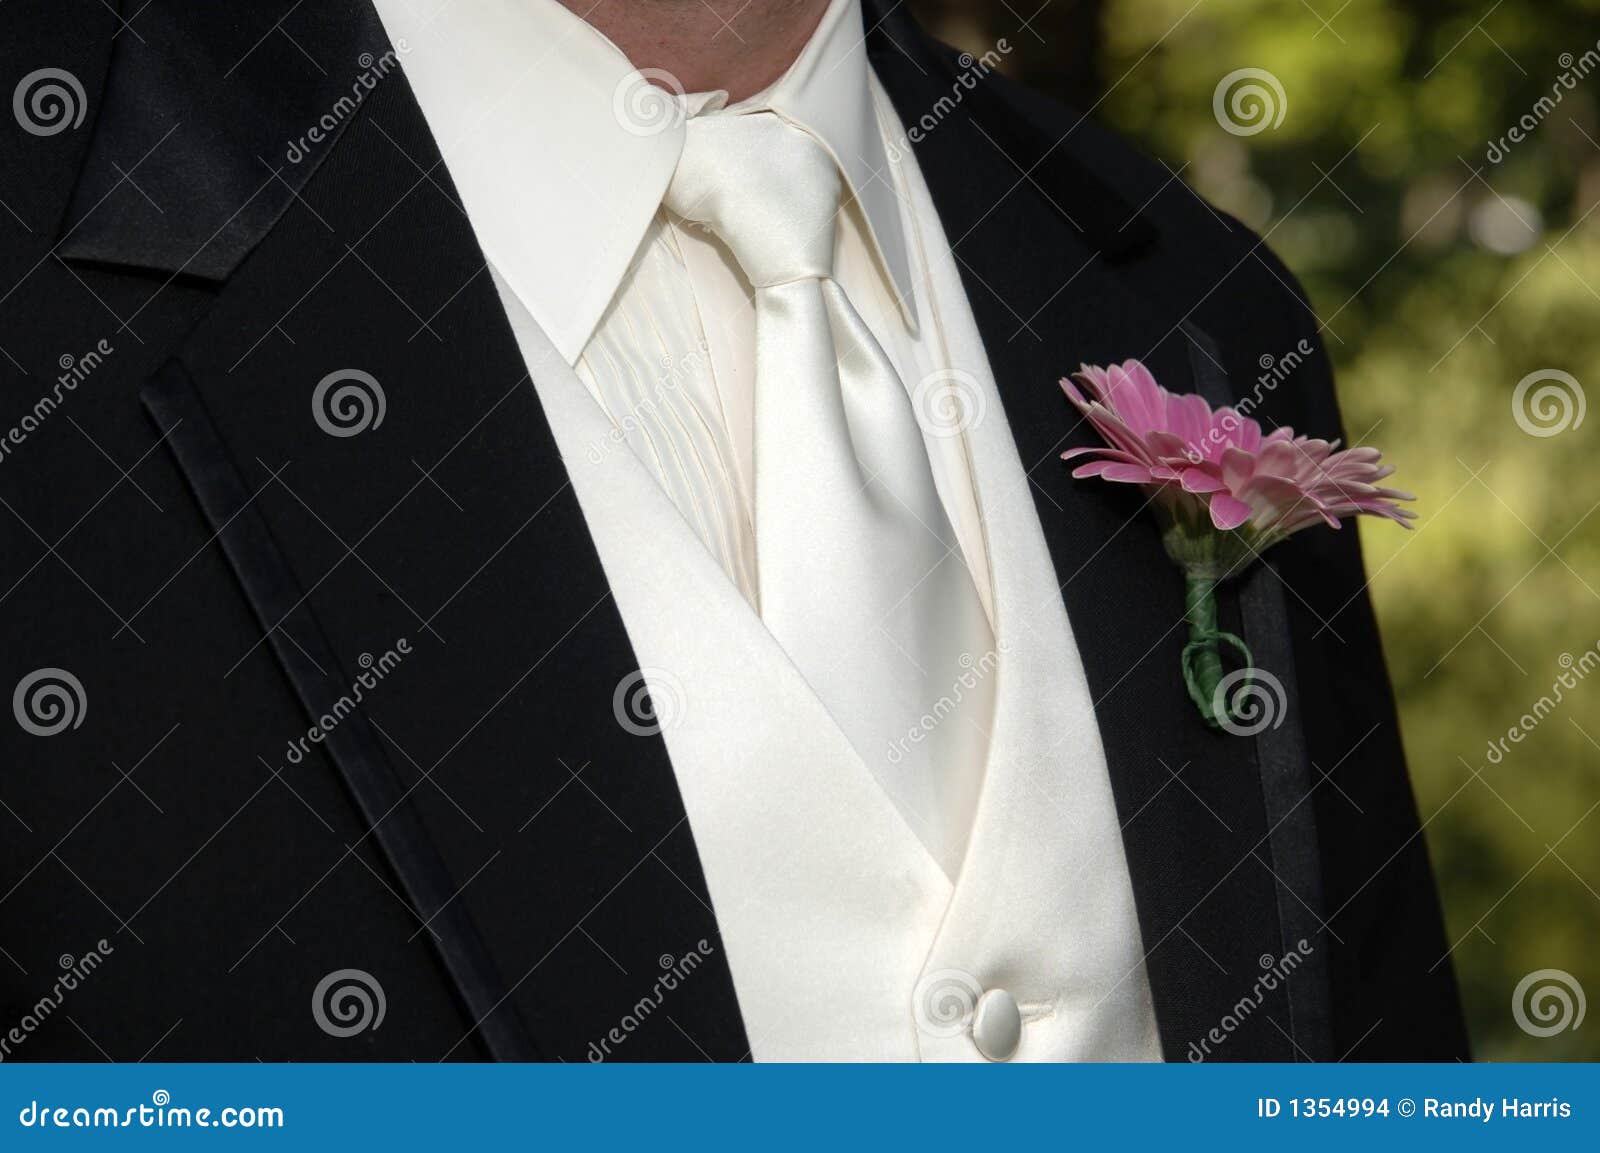 groom's black tux and tie